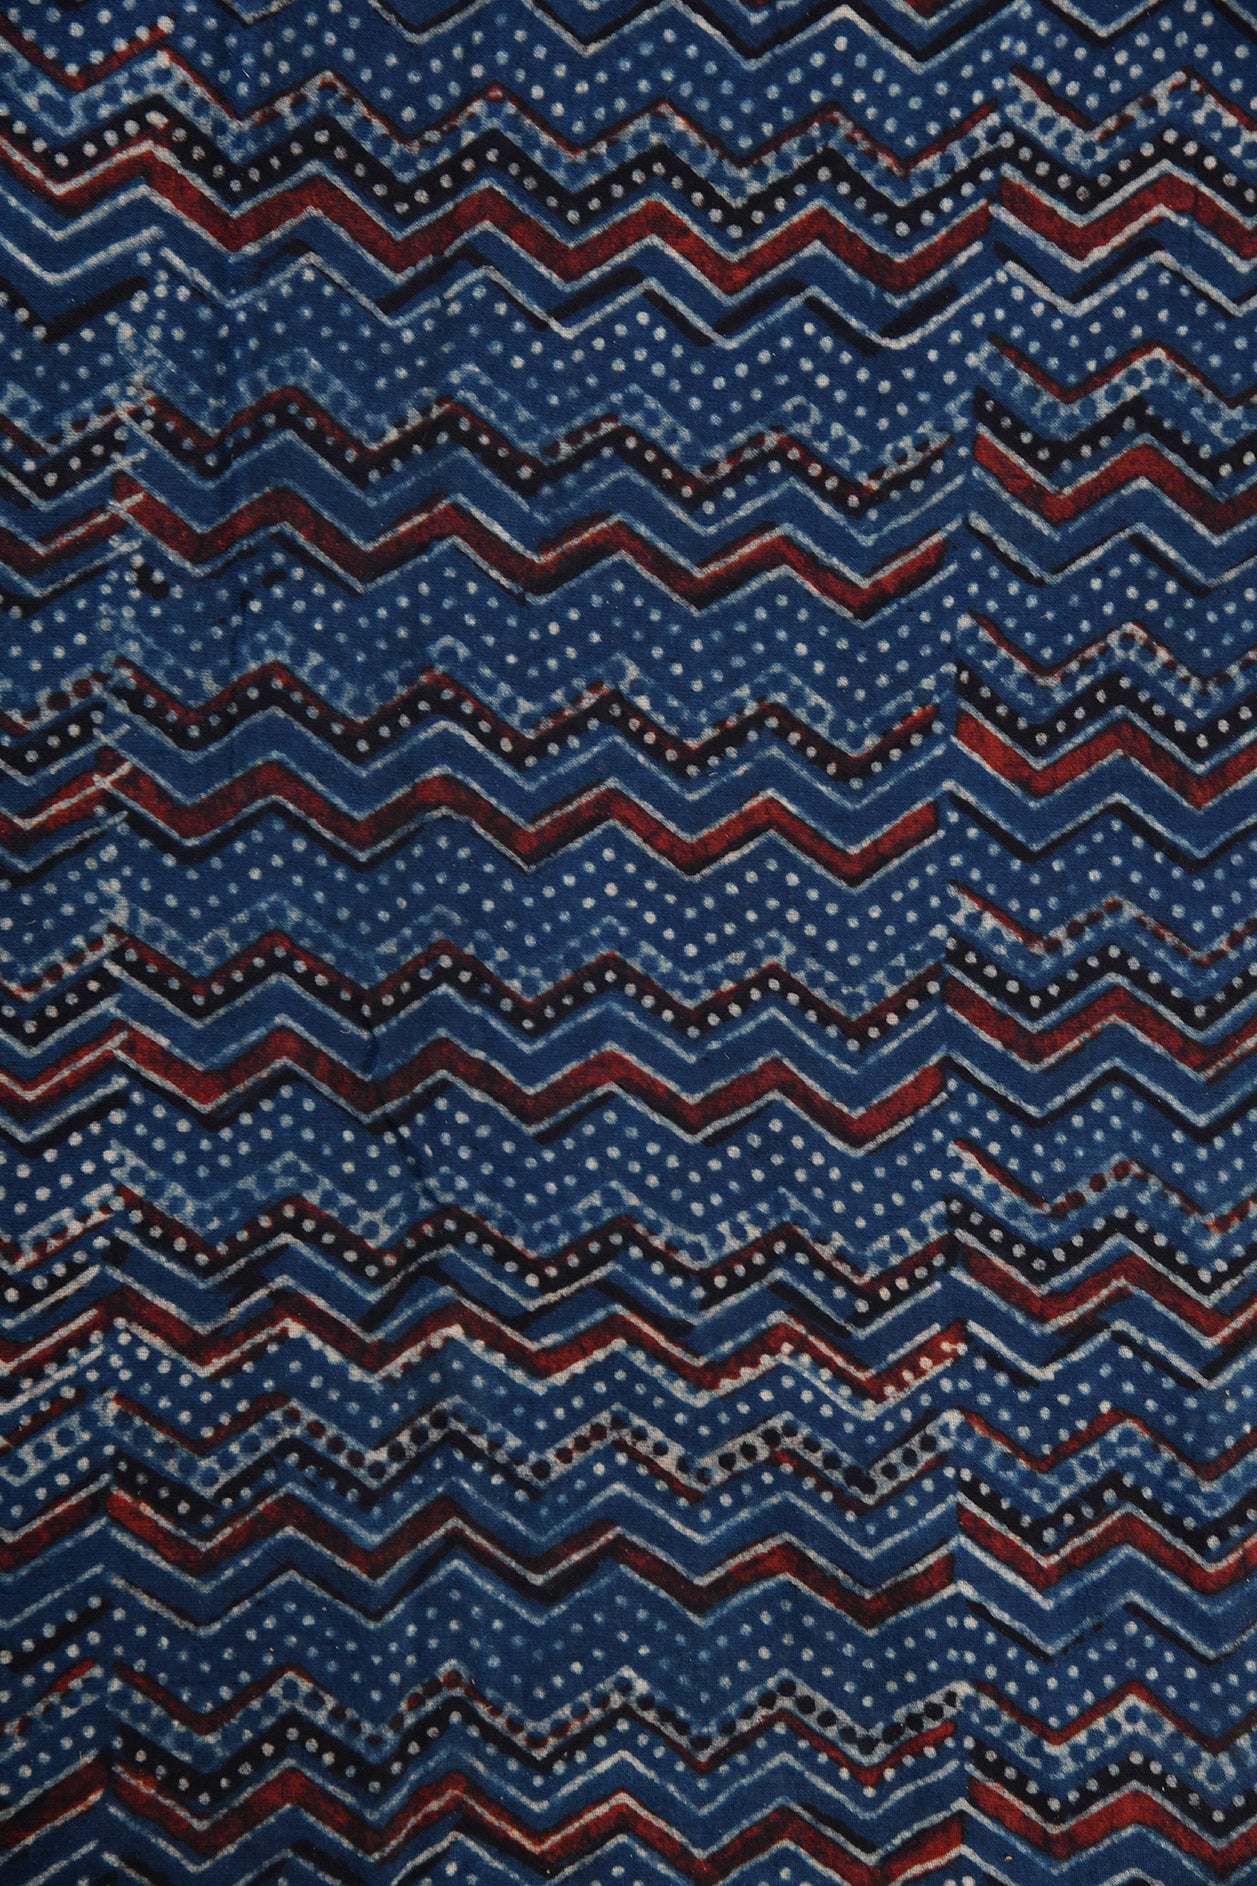 Ajrakh Printed Design Blue Cotton Saree